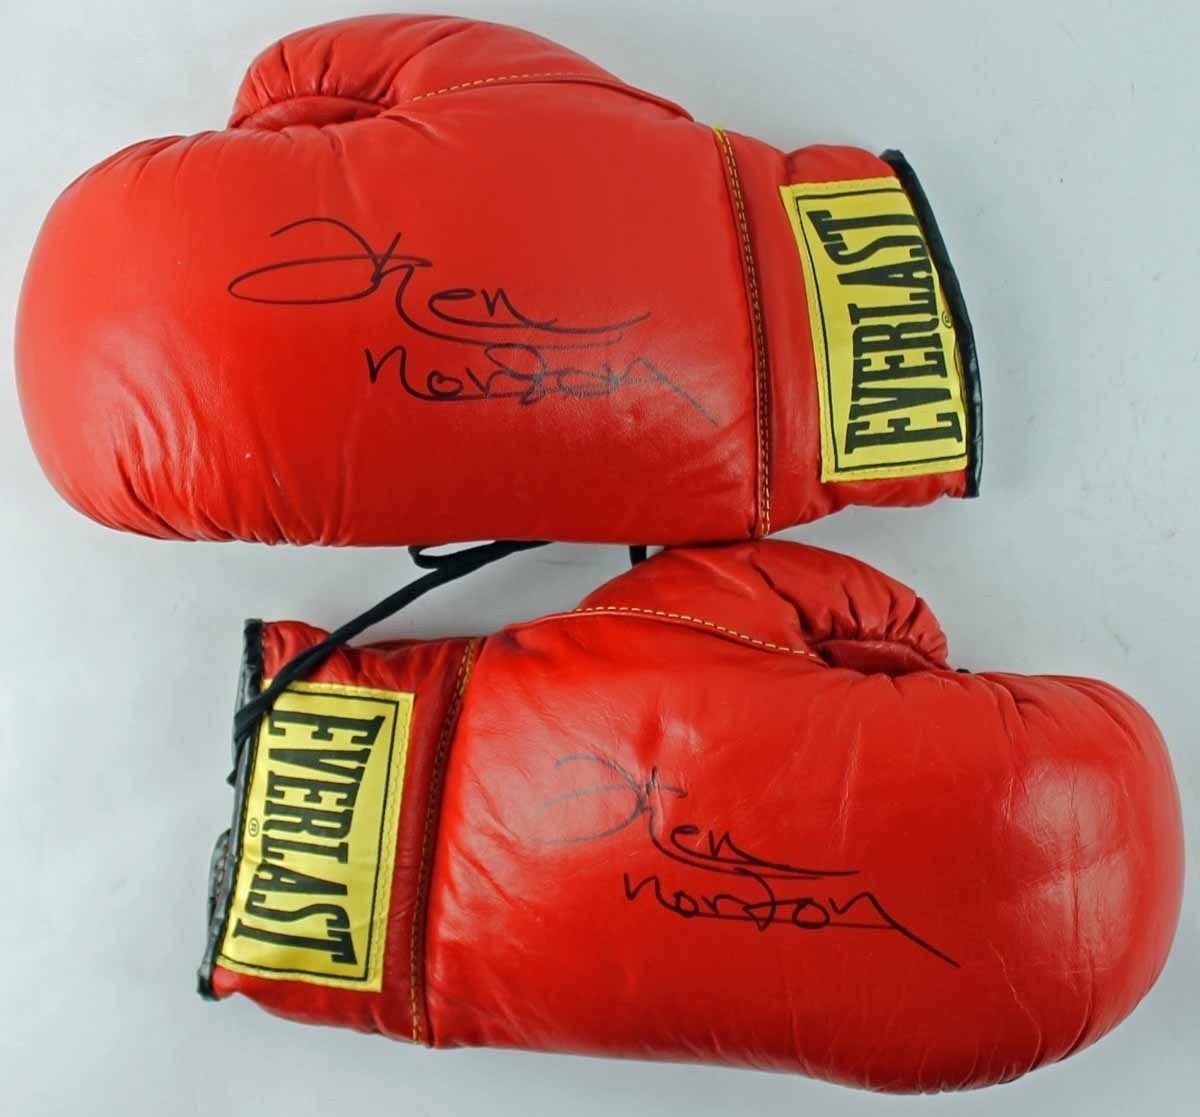 Lot Detail - Ken Norton Signed Pair (2) of Everlast Boxing Gloves (JSA)